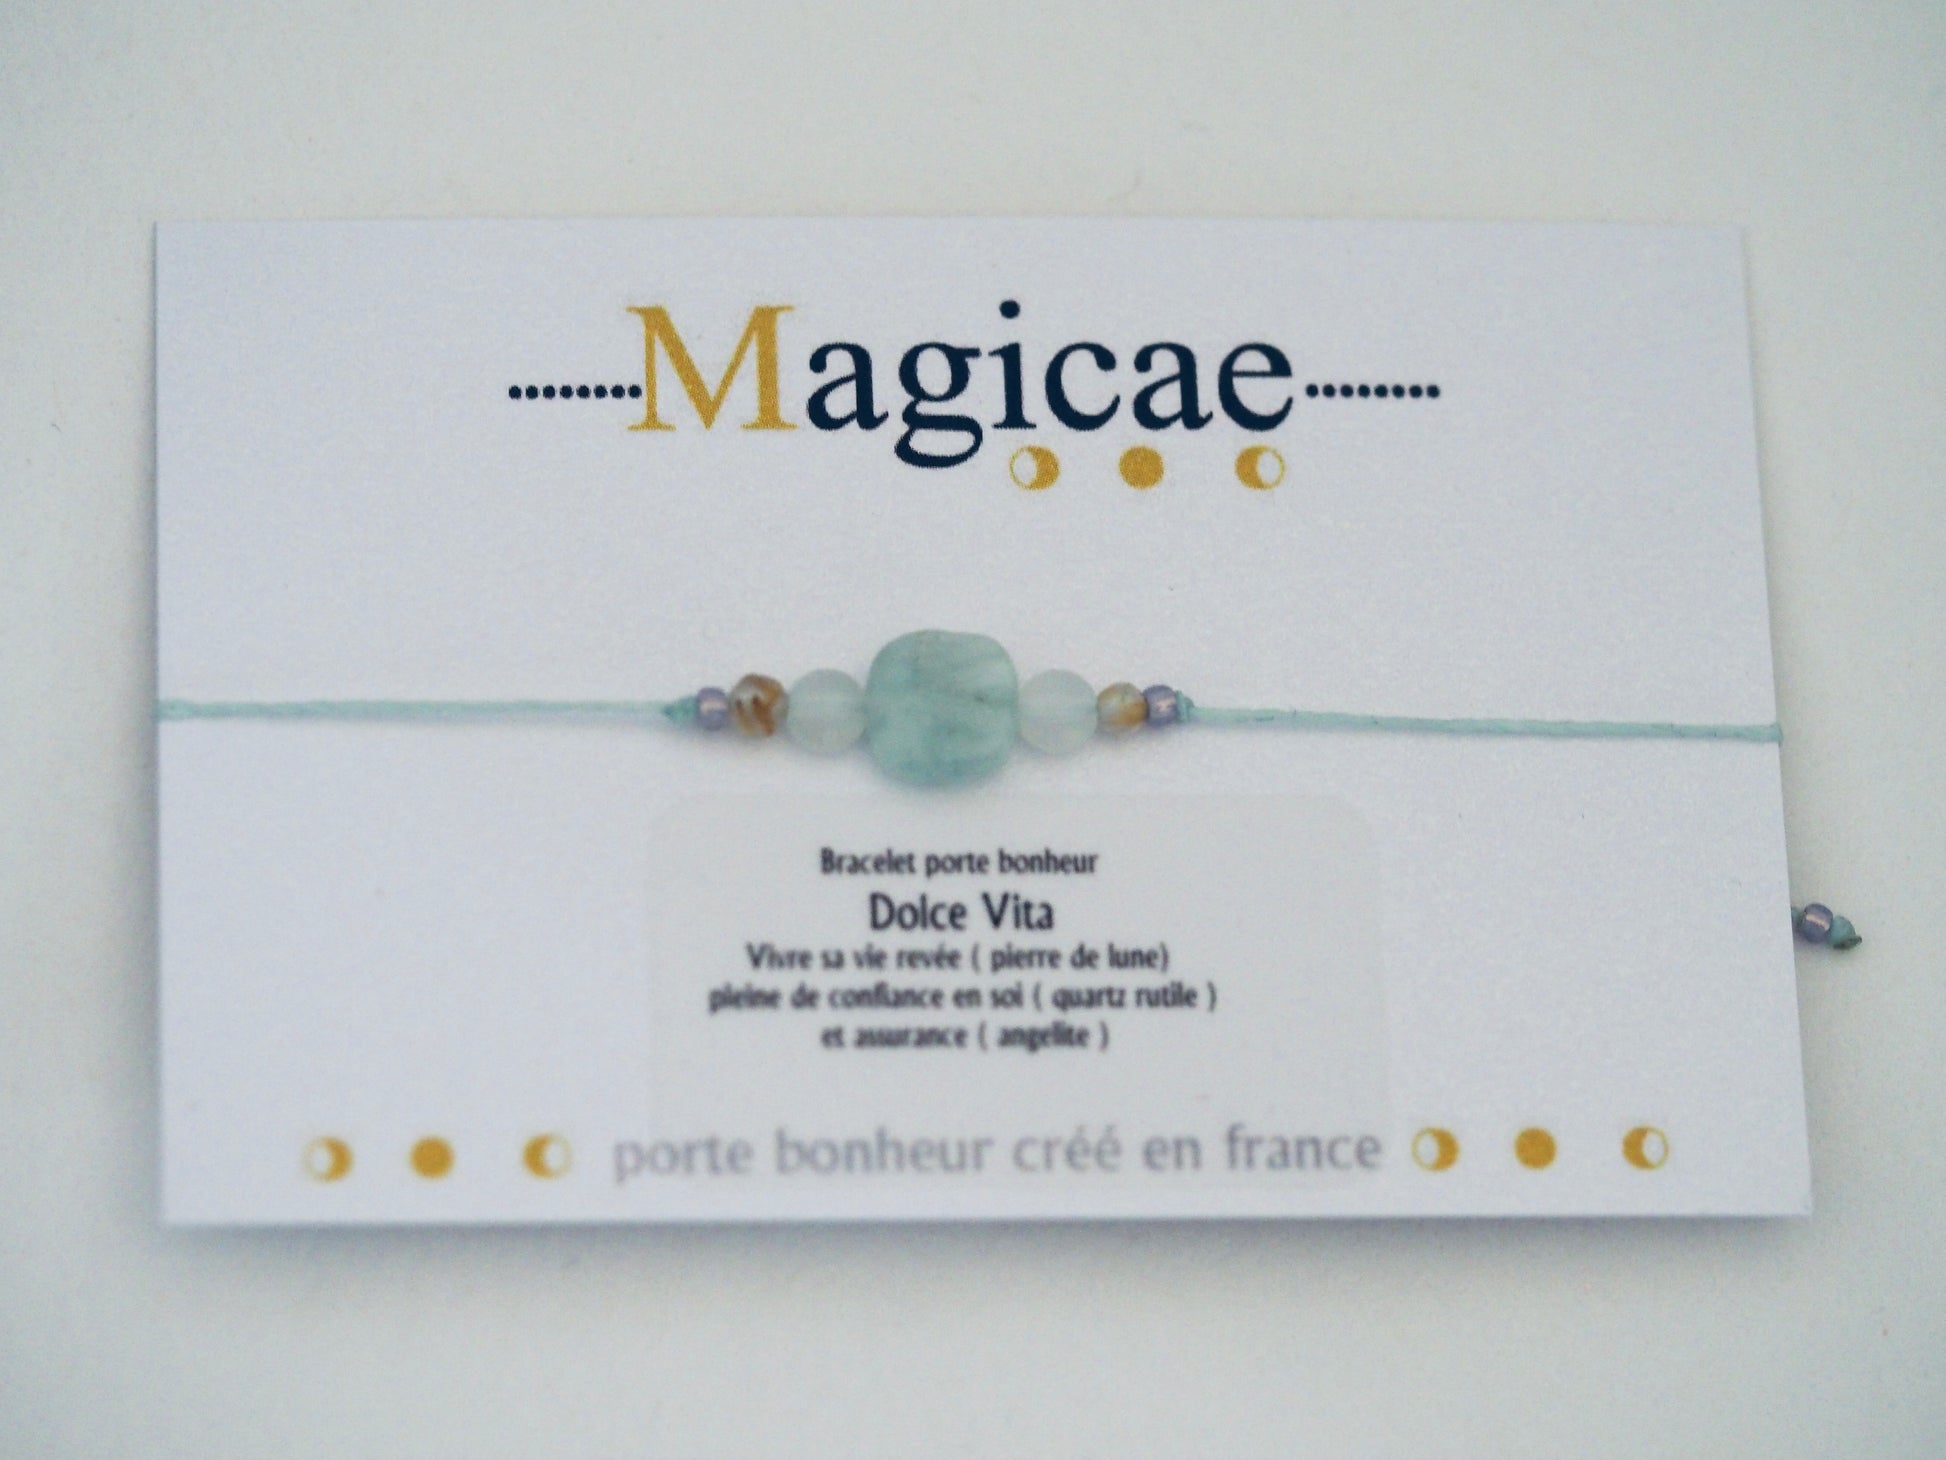 Bracelet porte bonheur dolce vita - Magicae